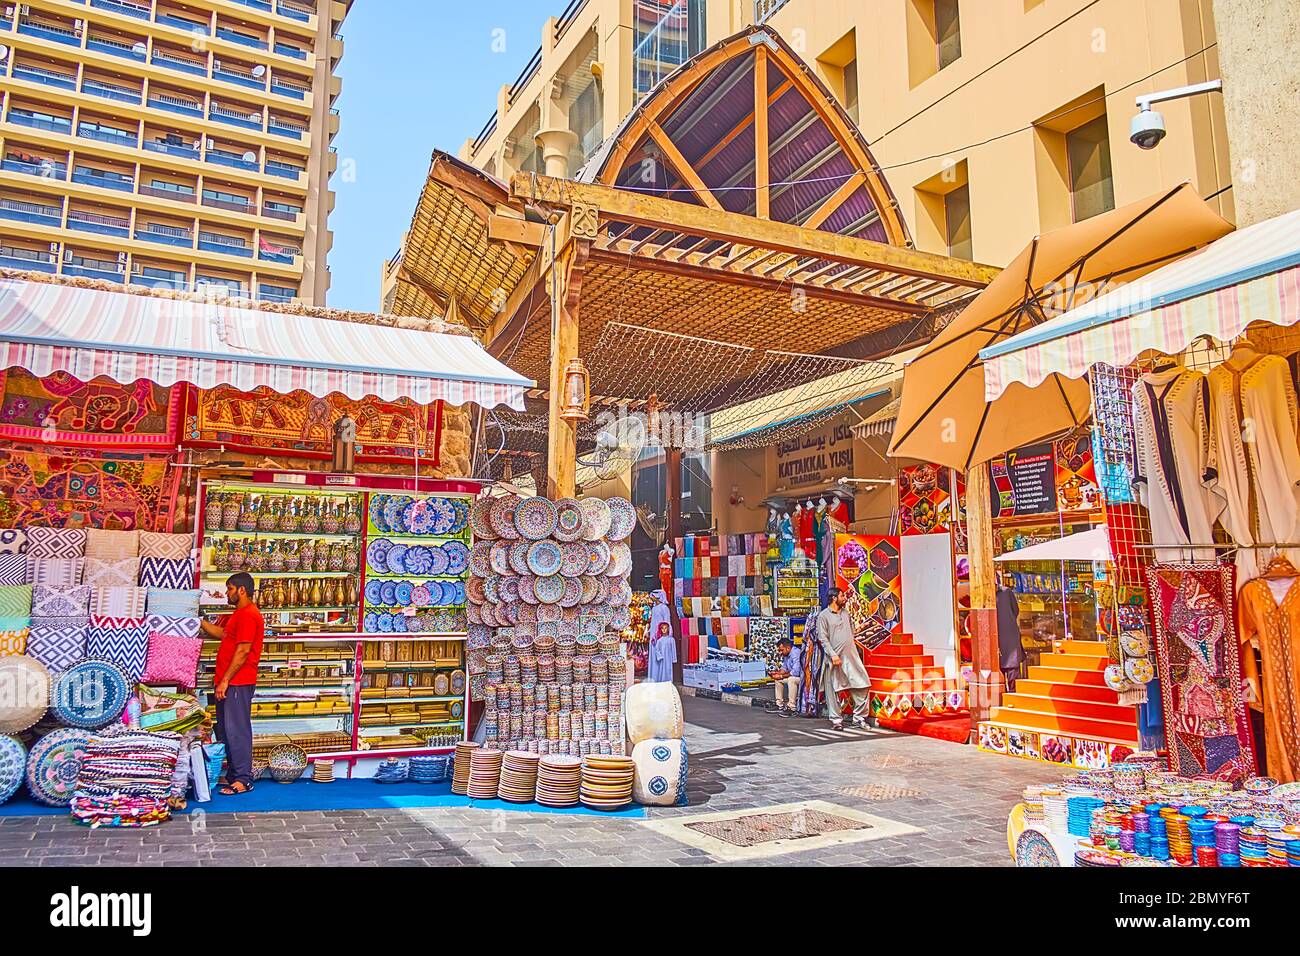 DUBAI, UAE - MARCH 2, 2020: The Bur Dubai Grand Souq (bazaar, market) has atmosphere of classic Eastern market with large amount of interesting goods Stock Photo